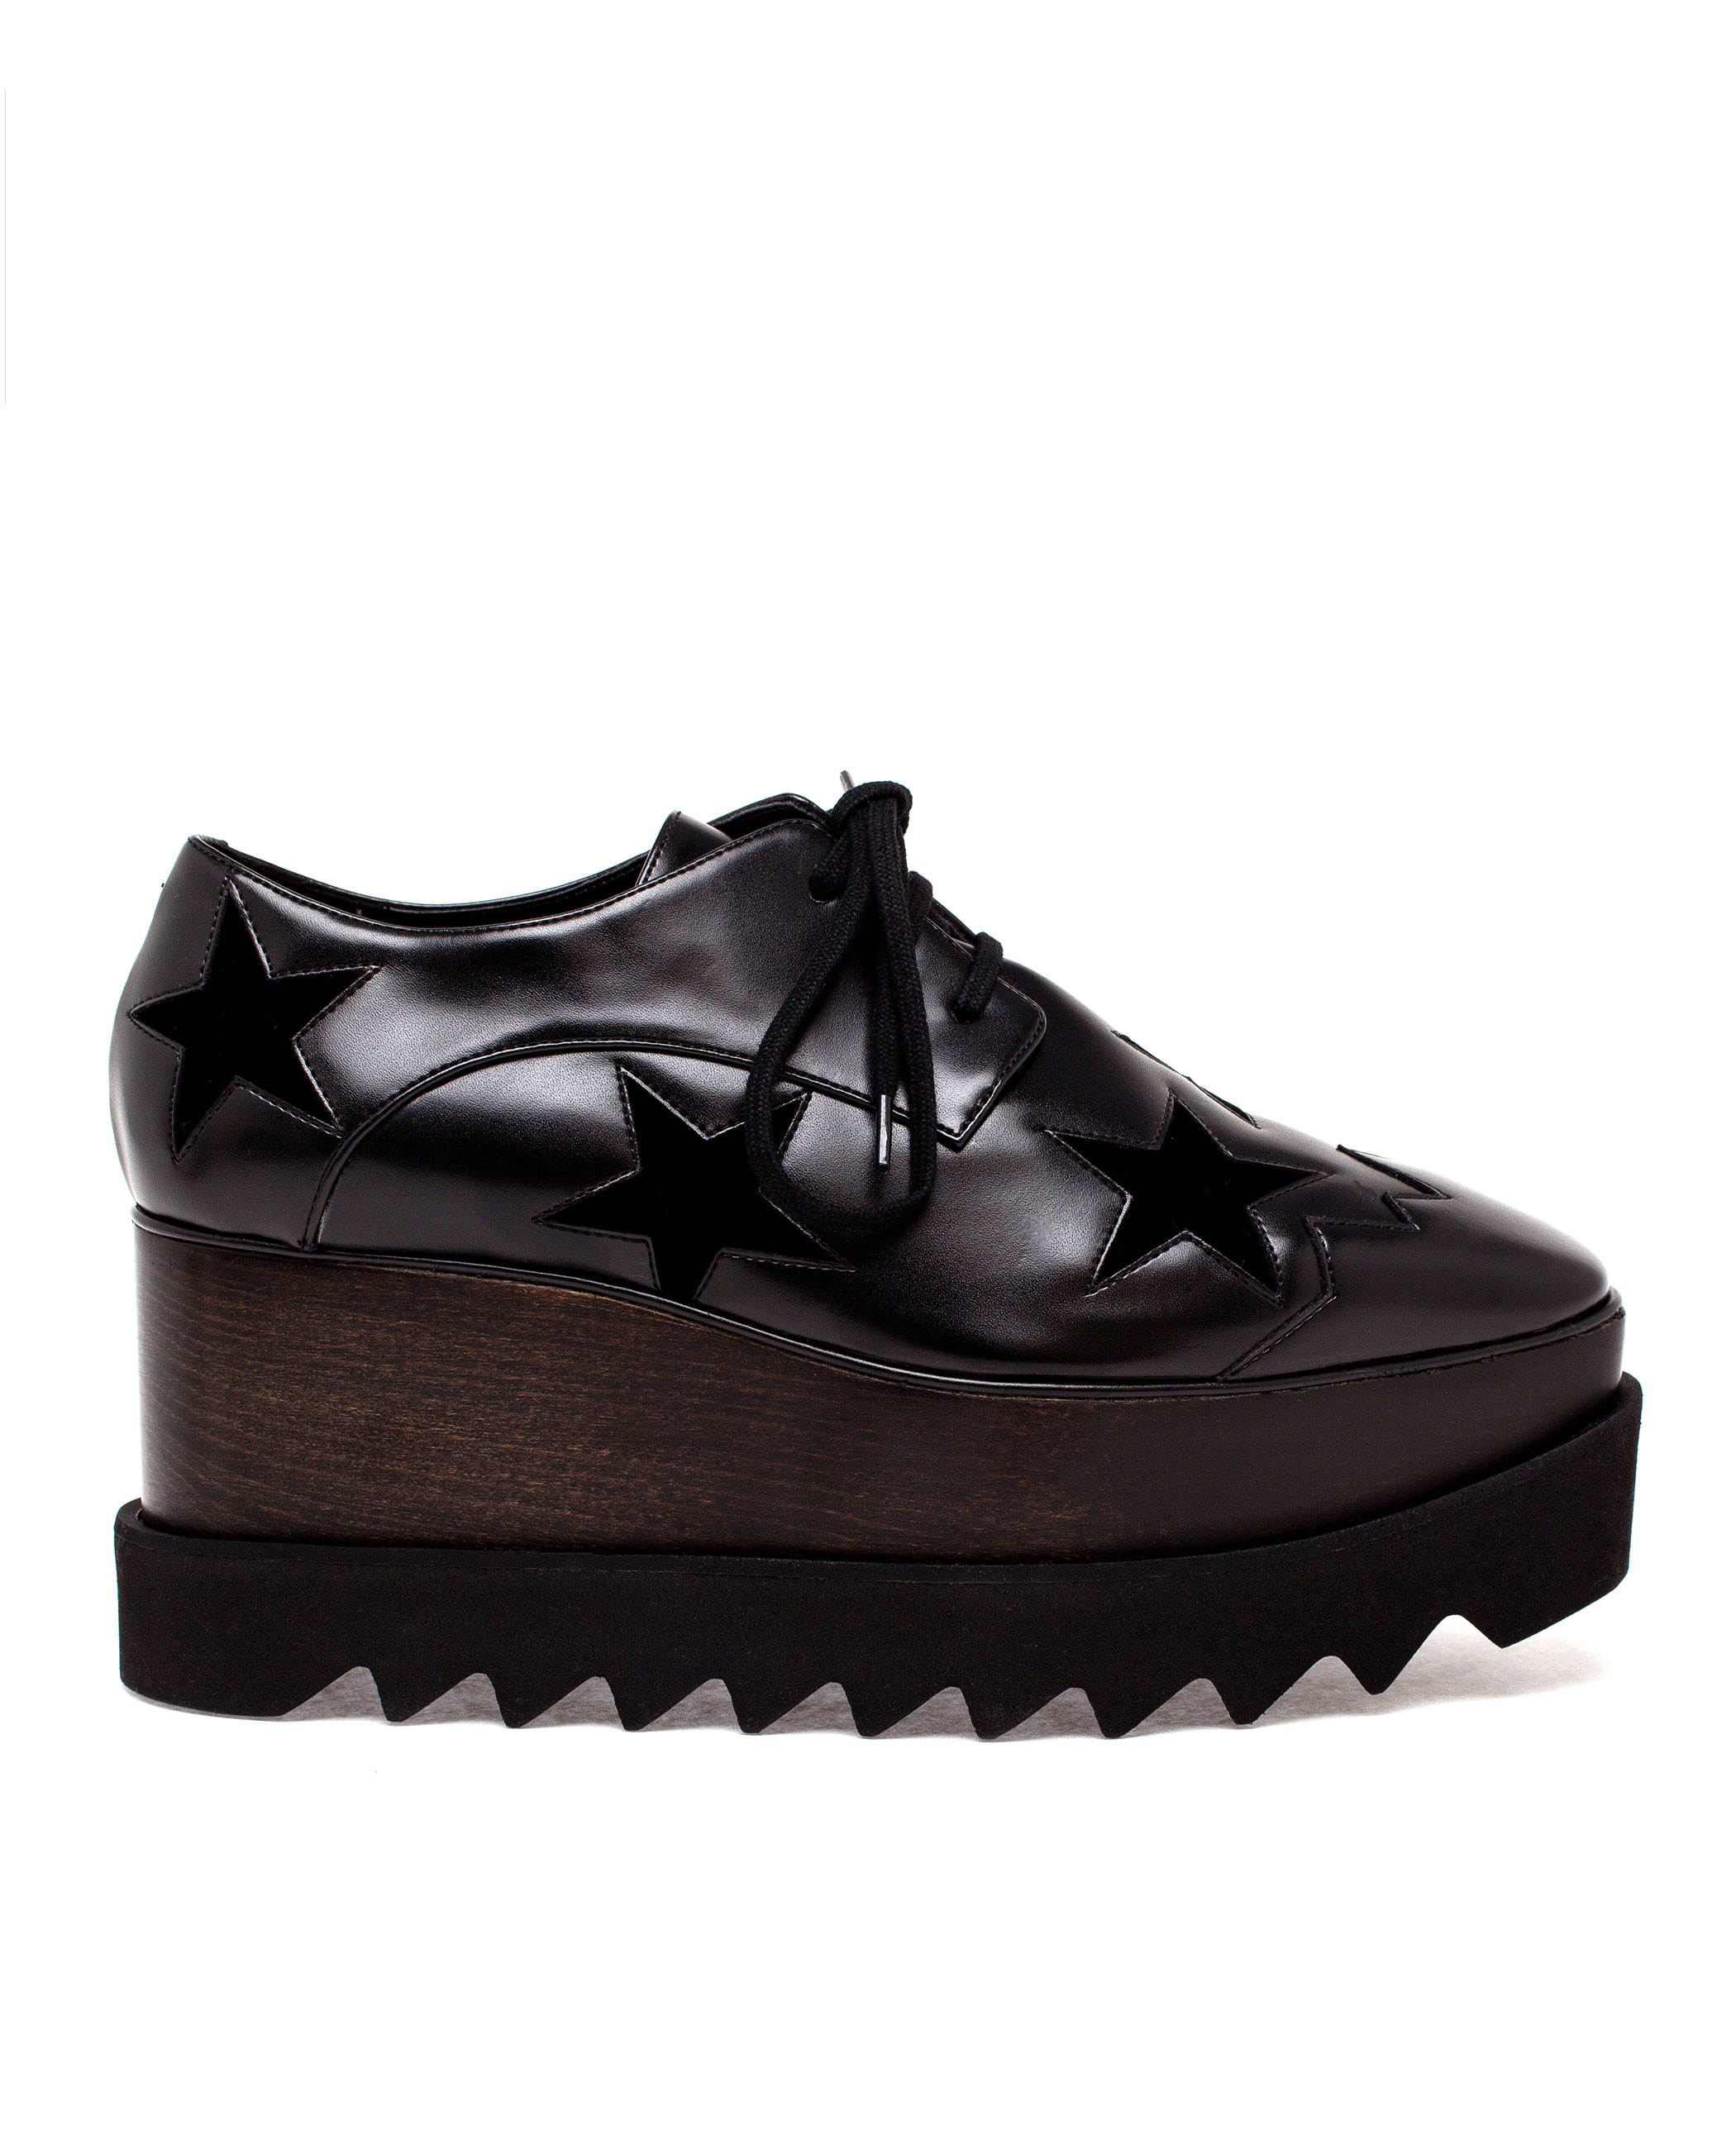 Stella mccartney Scarpa Star Shoes in Black | Lyst